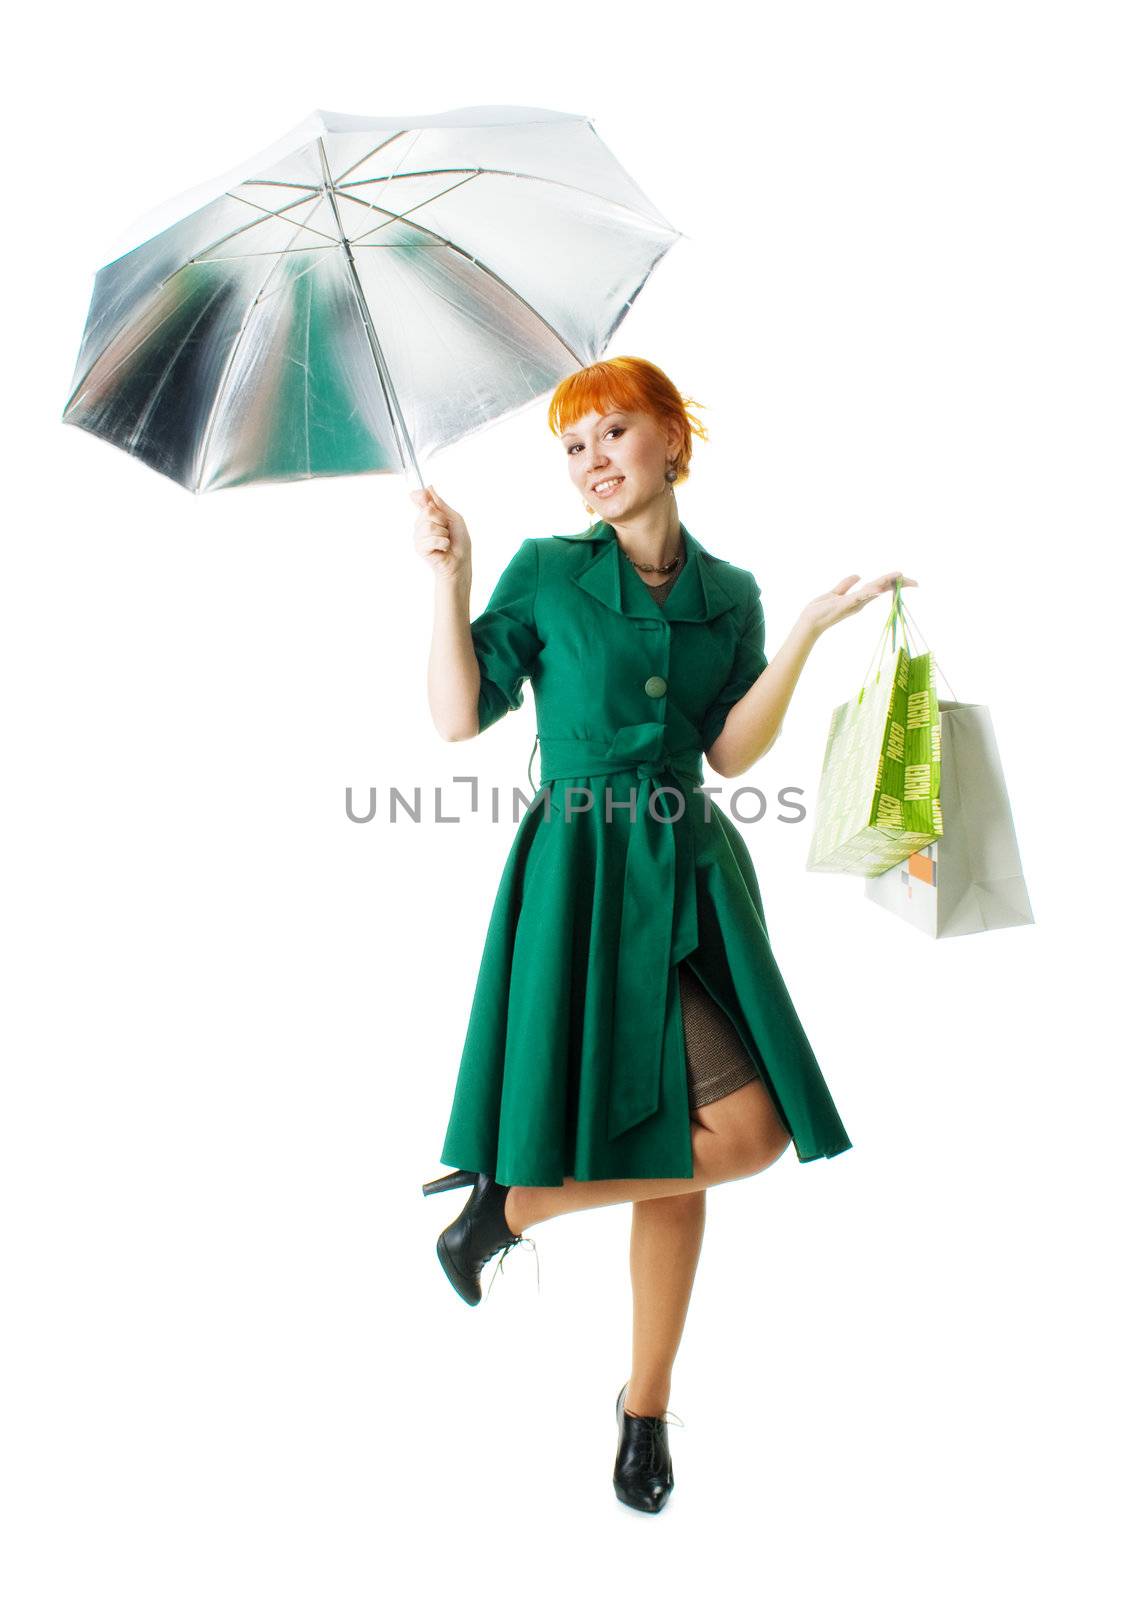 Beautiful lady with an umbrella by Gdolgikh